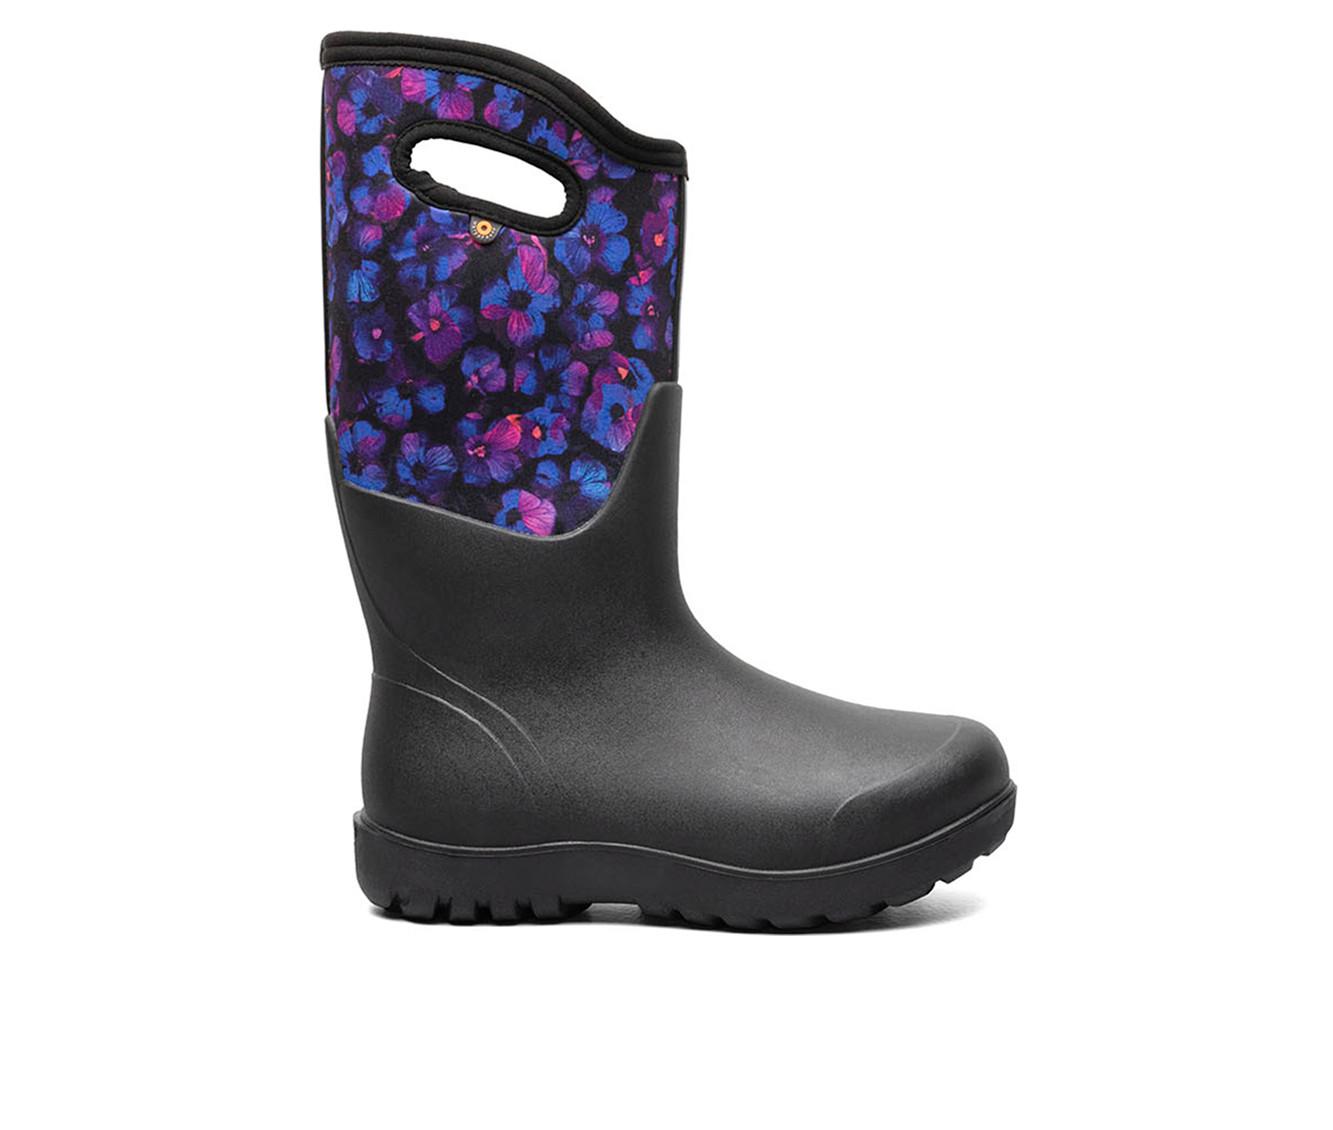 Women's Bogs Footwear Neo Classic Petals Rain Boots